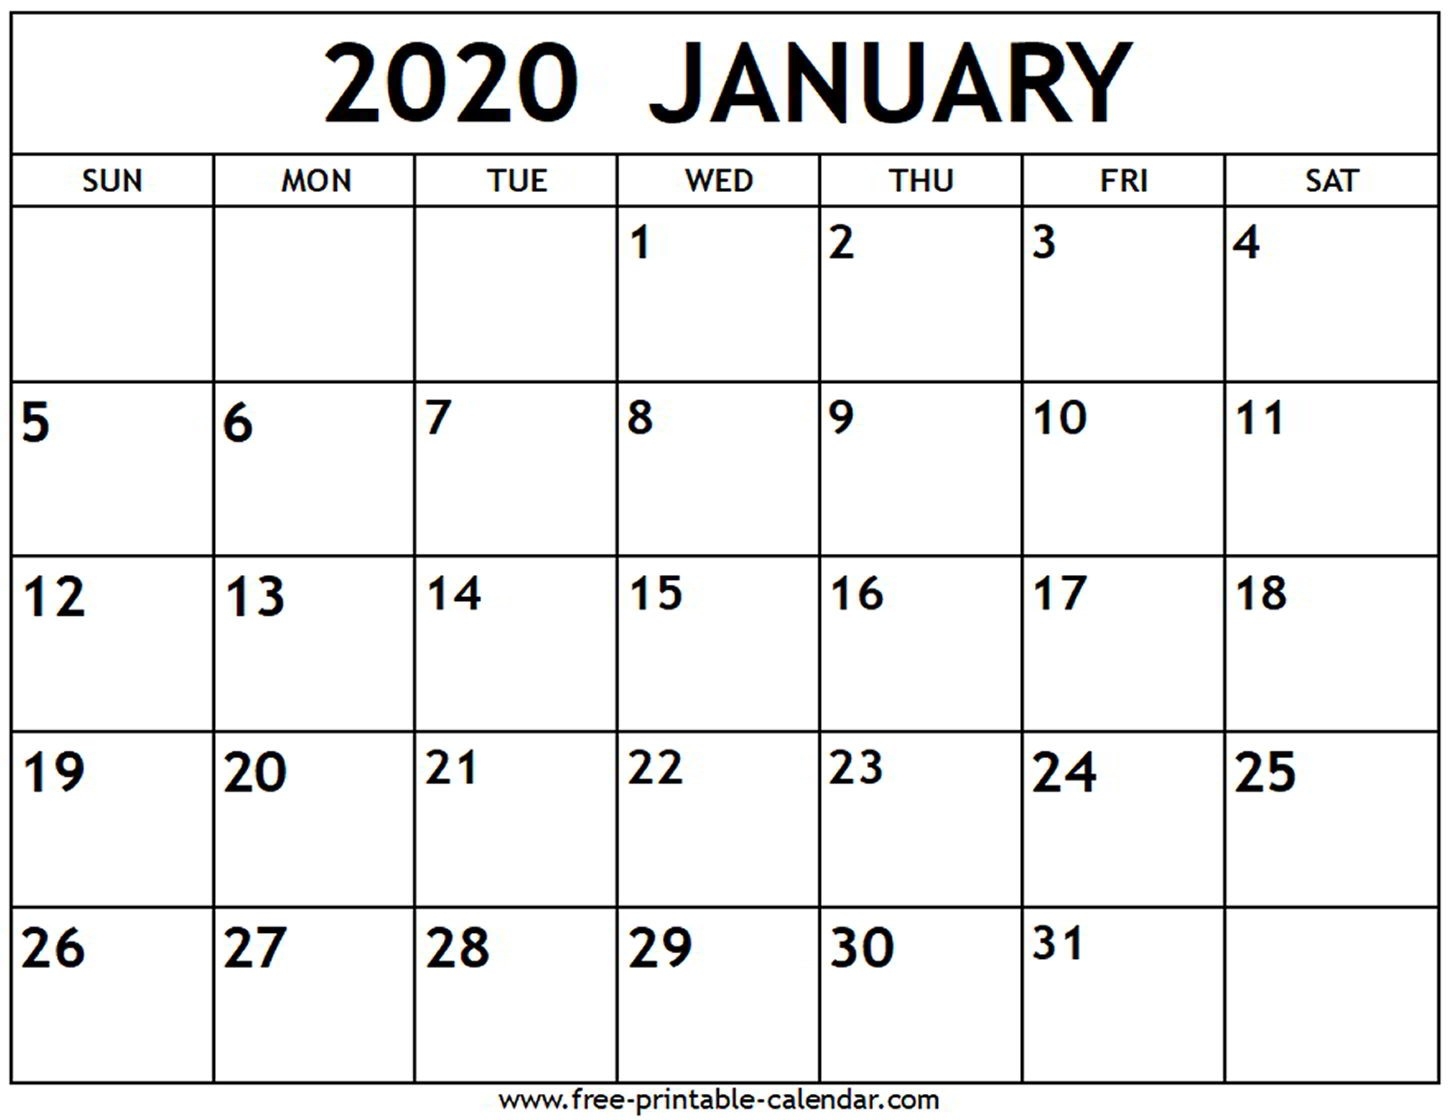 January 2020 Calendar - Free-Printable-Calendar-January 2020 Calendar Uk